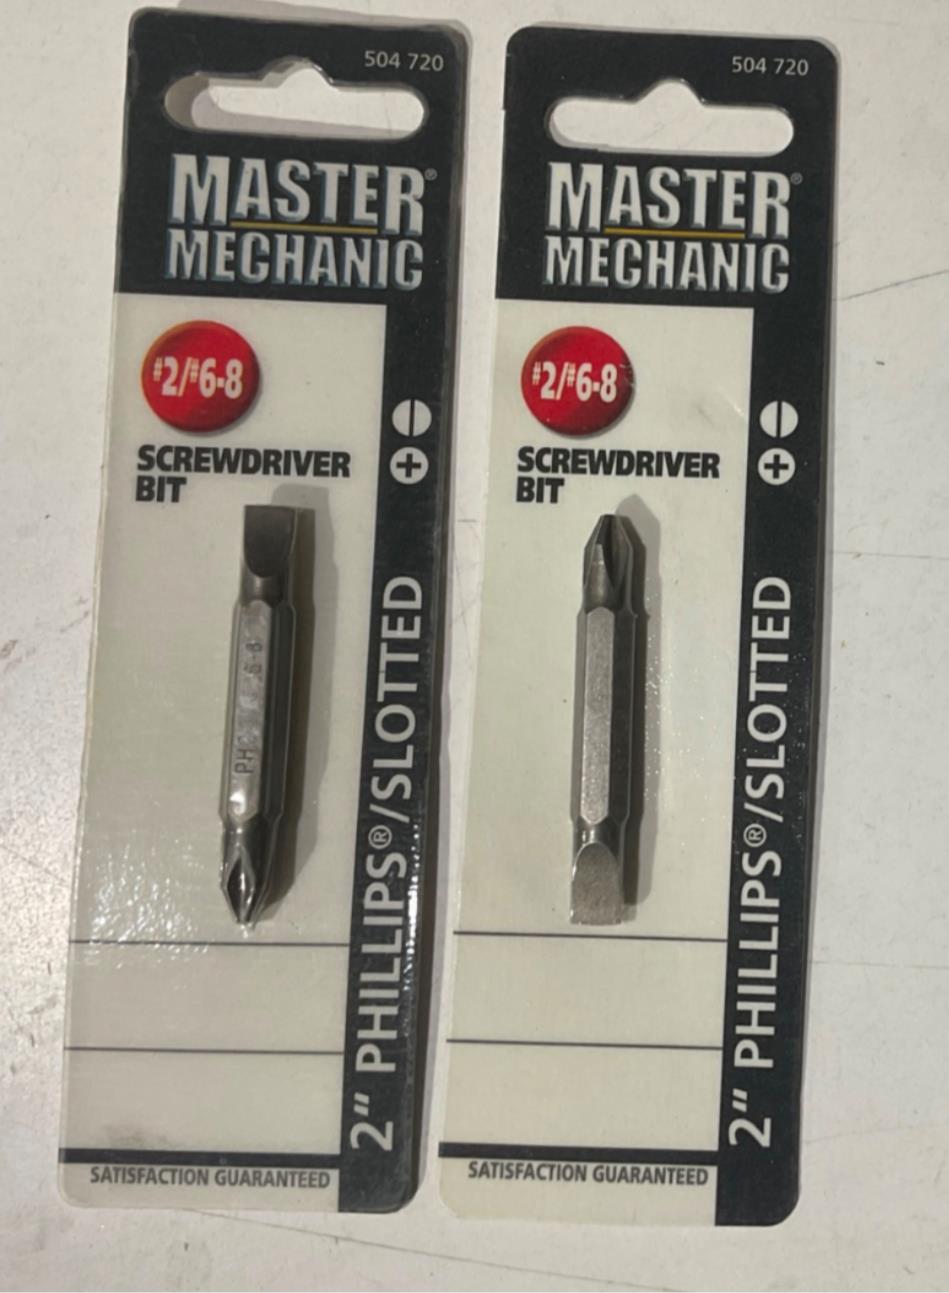 Master Mechanic 504 720 #2/6-8 2" Phillips/Slotted Screwdriver Bit 2pks